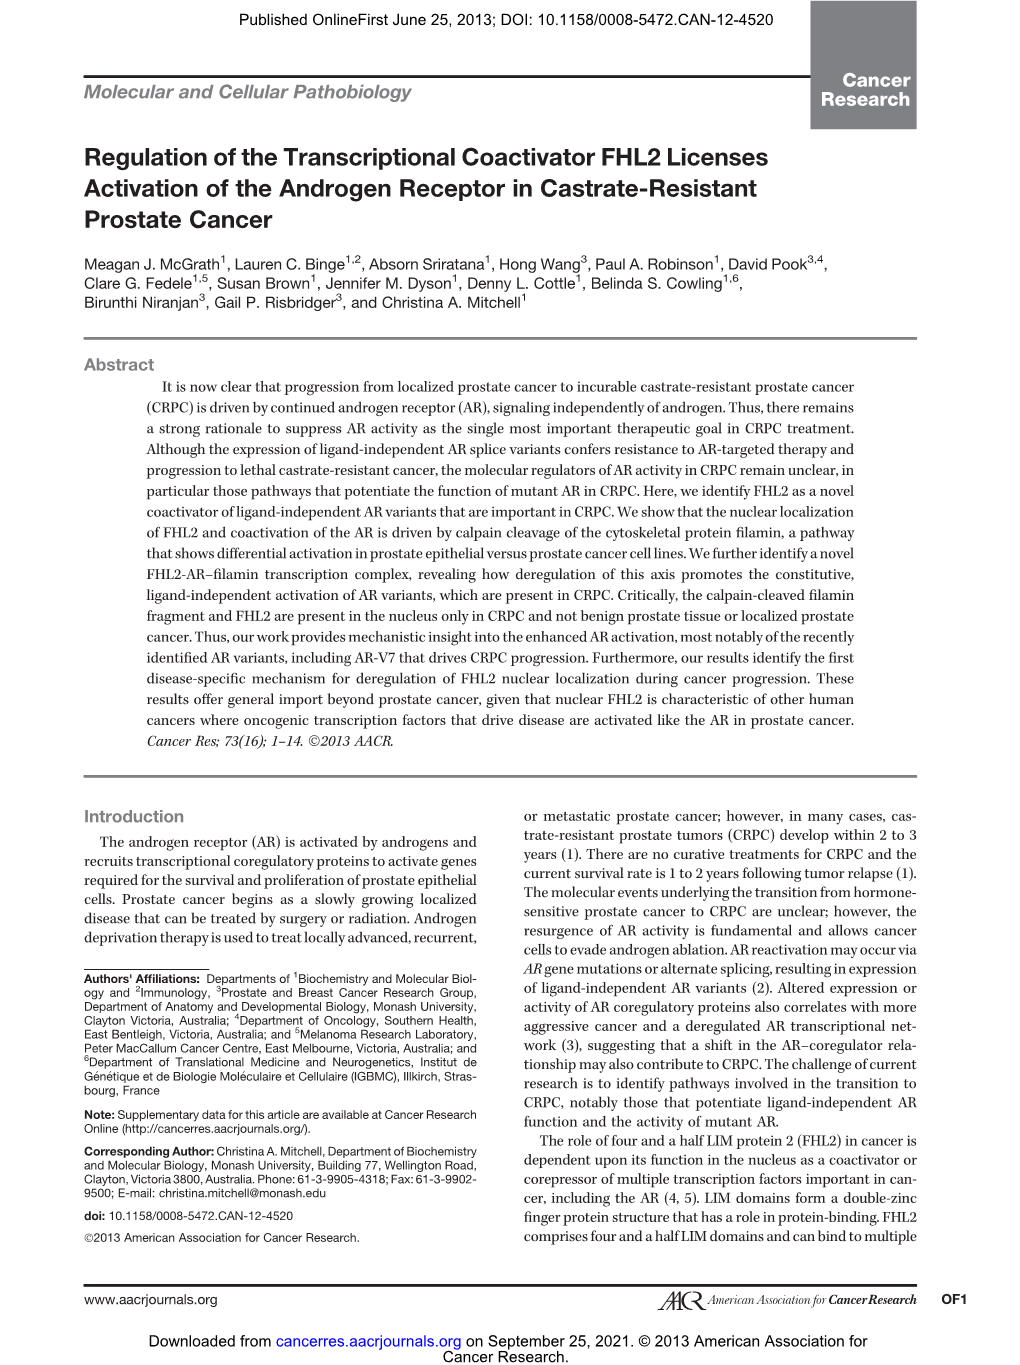 Regulation of the Transcriptional Coactivator FHL2 Licenses Activation of the Androgen Receptor in Castrate-Resistant Prostate Cancer